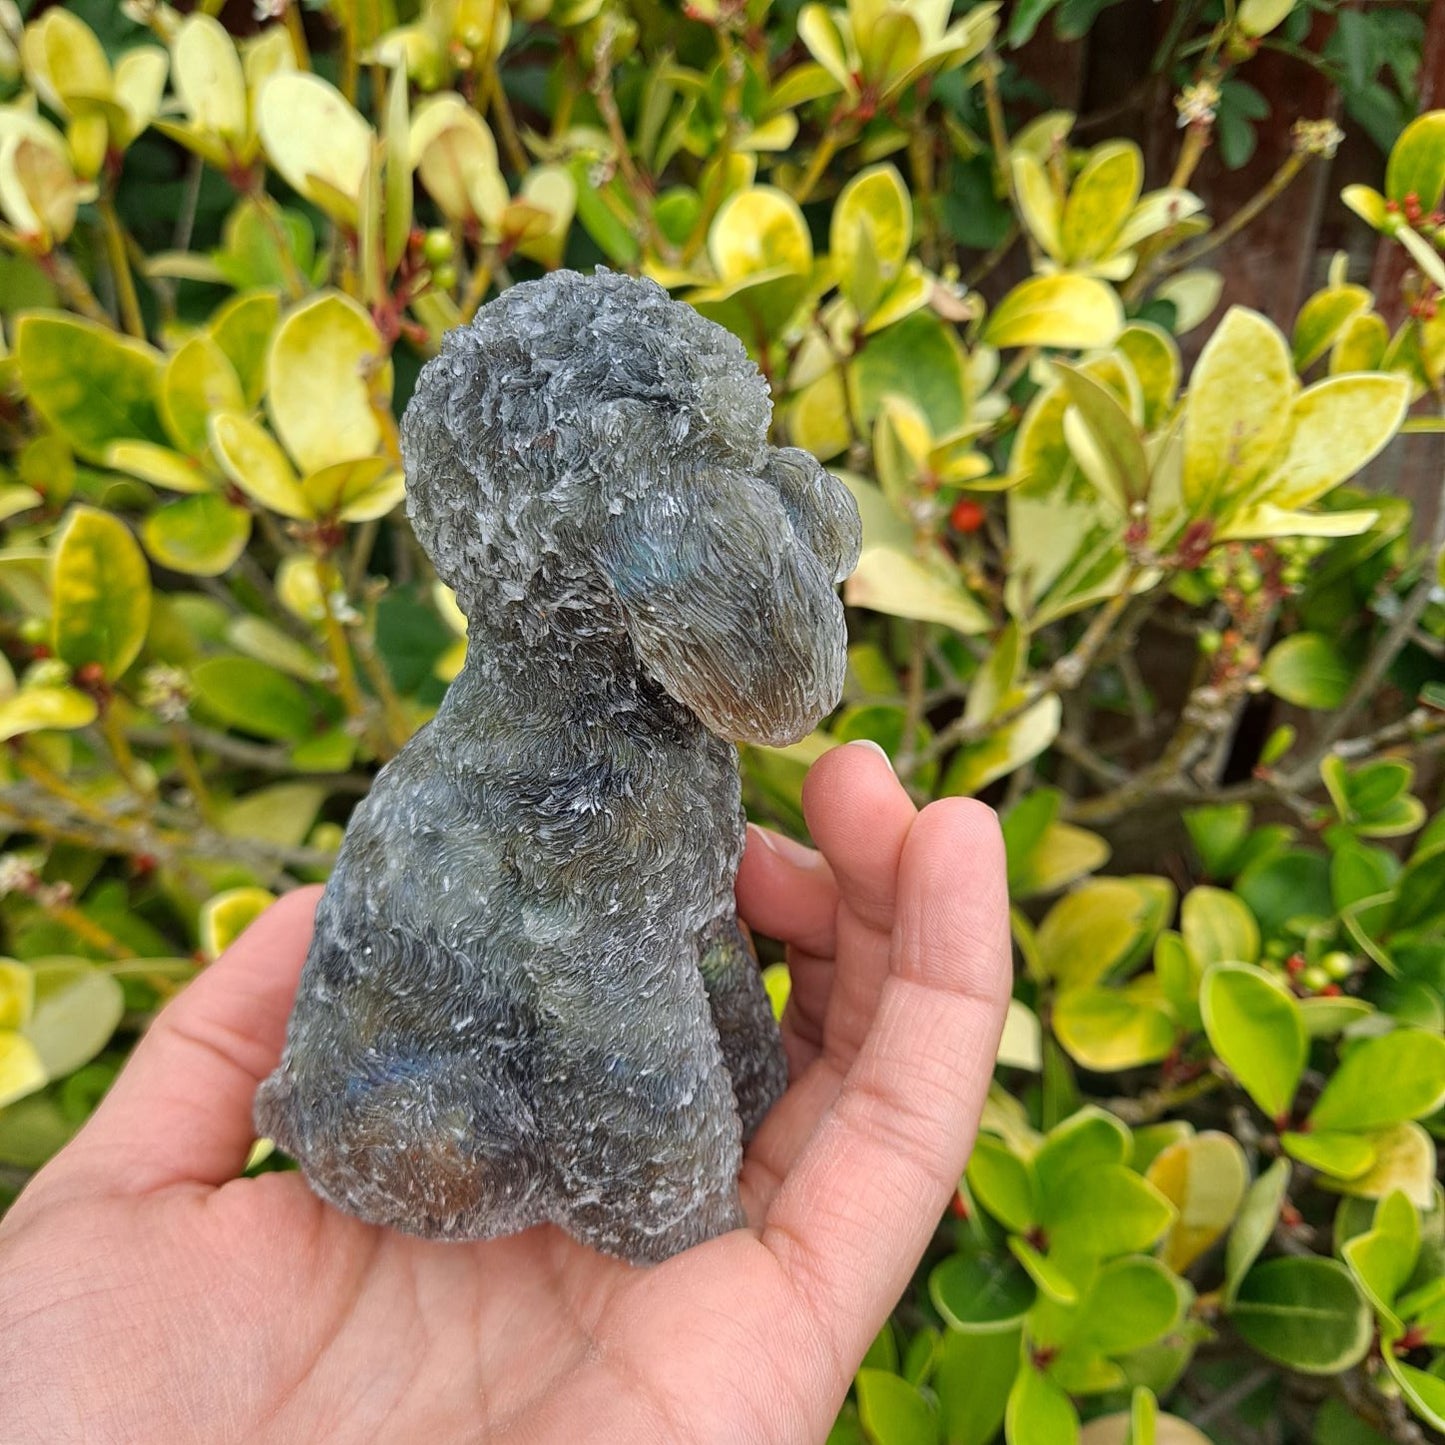 Labradorite Poodle figurine. Polished crystal chips encased in resin for a mesmerizing display.